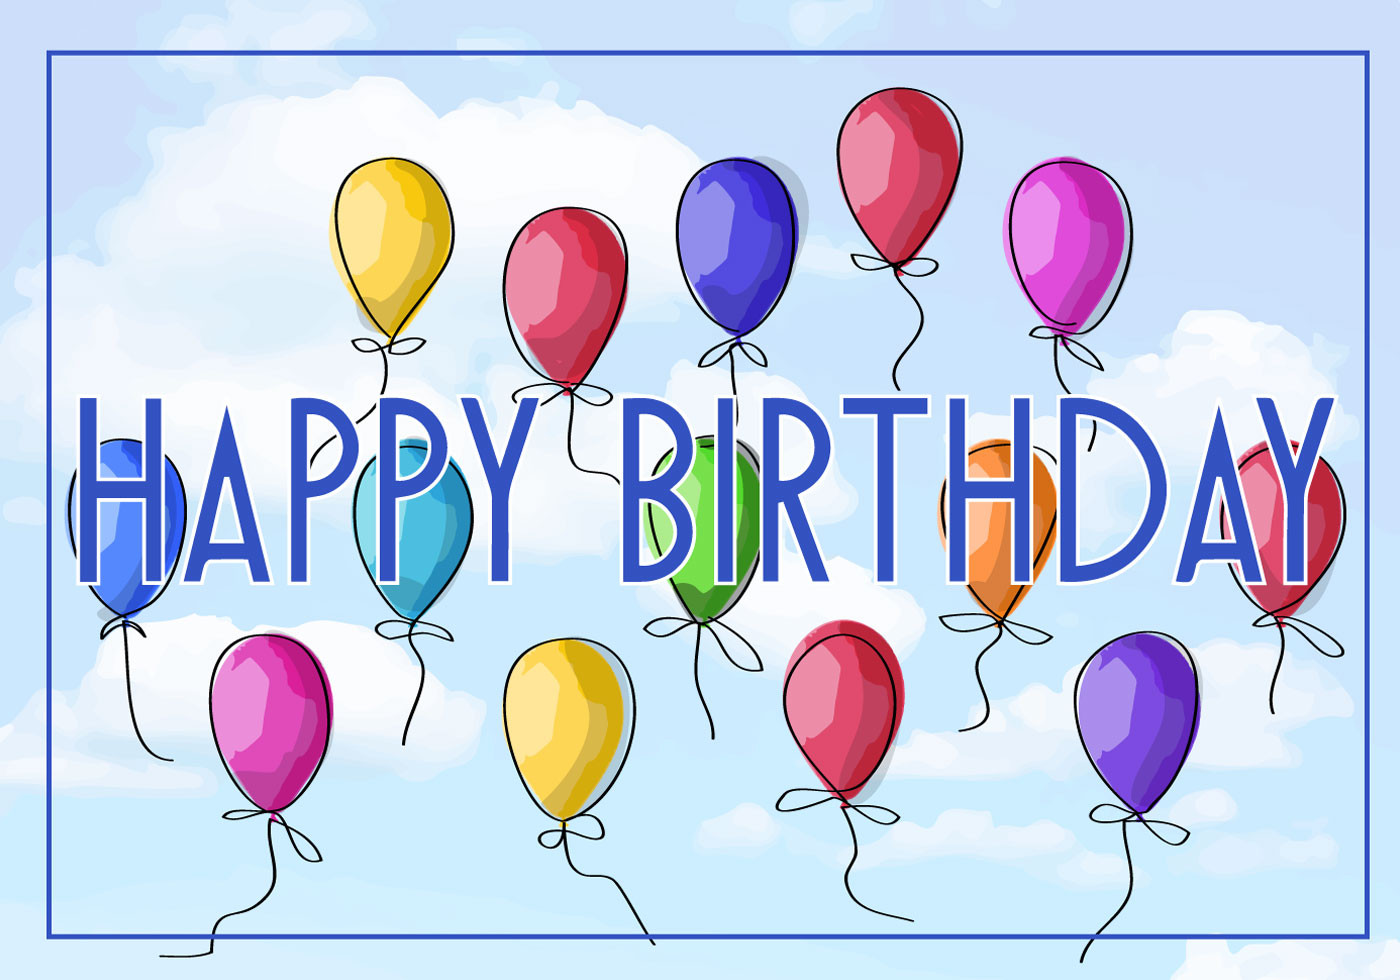 Free Birthday E-card
 Free Vector Illustration of a Happy Birthday Greeting Card